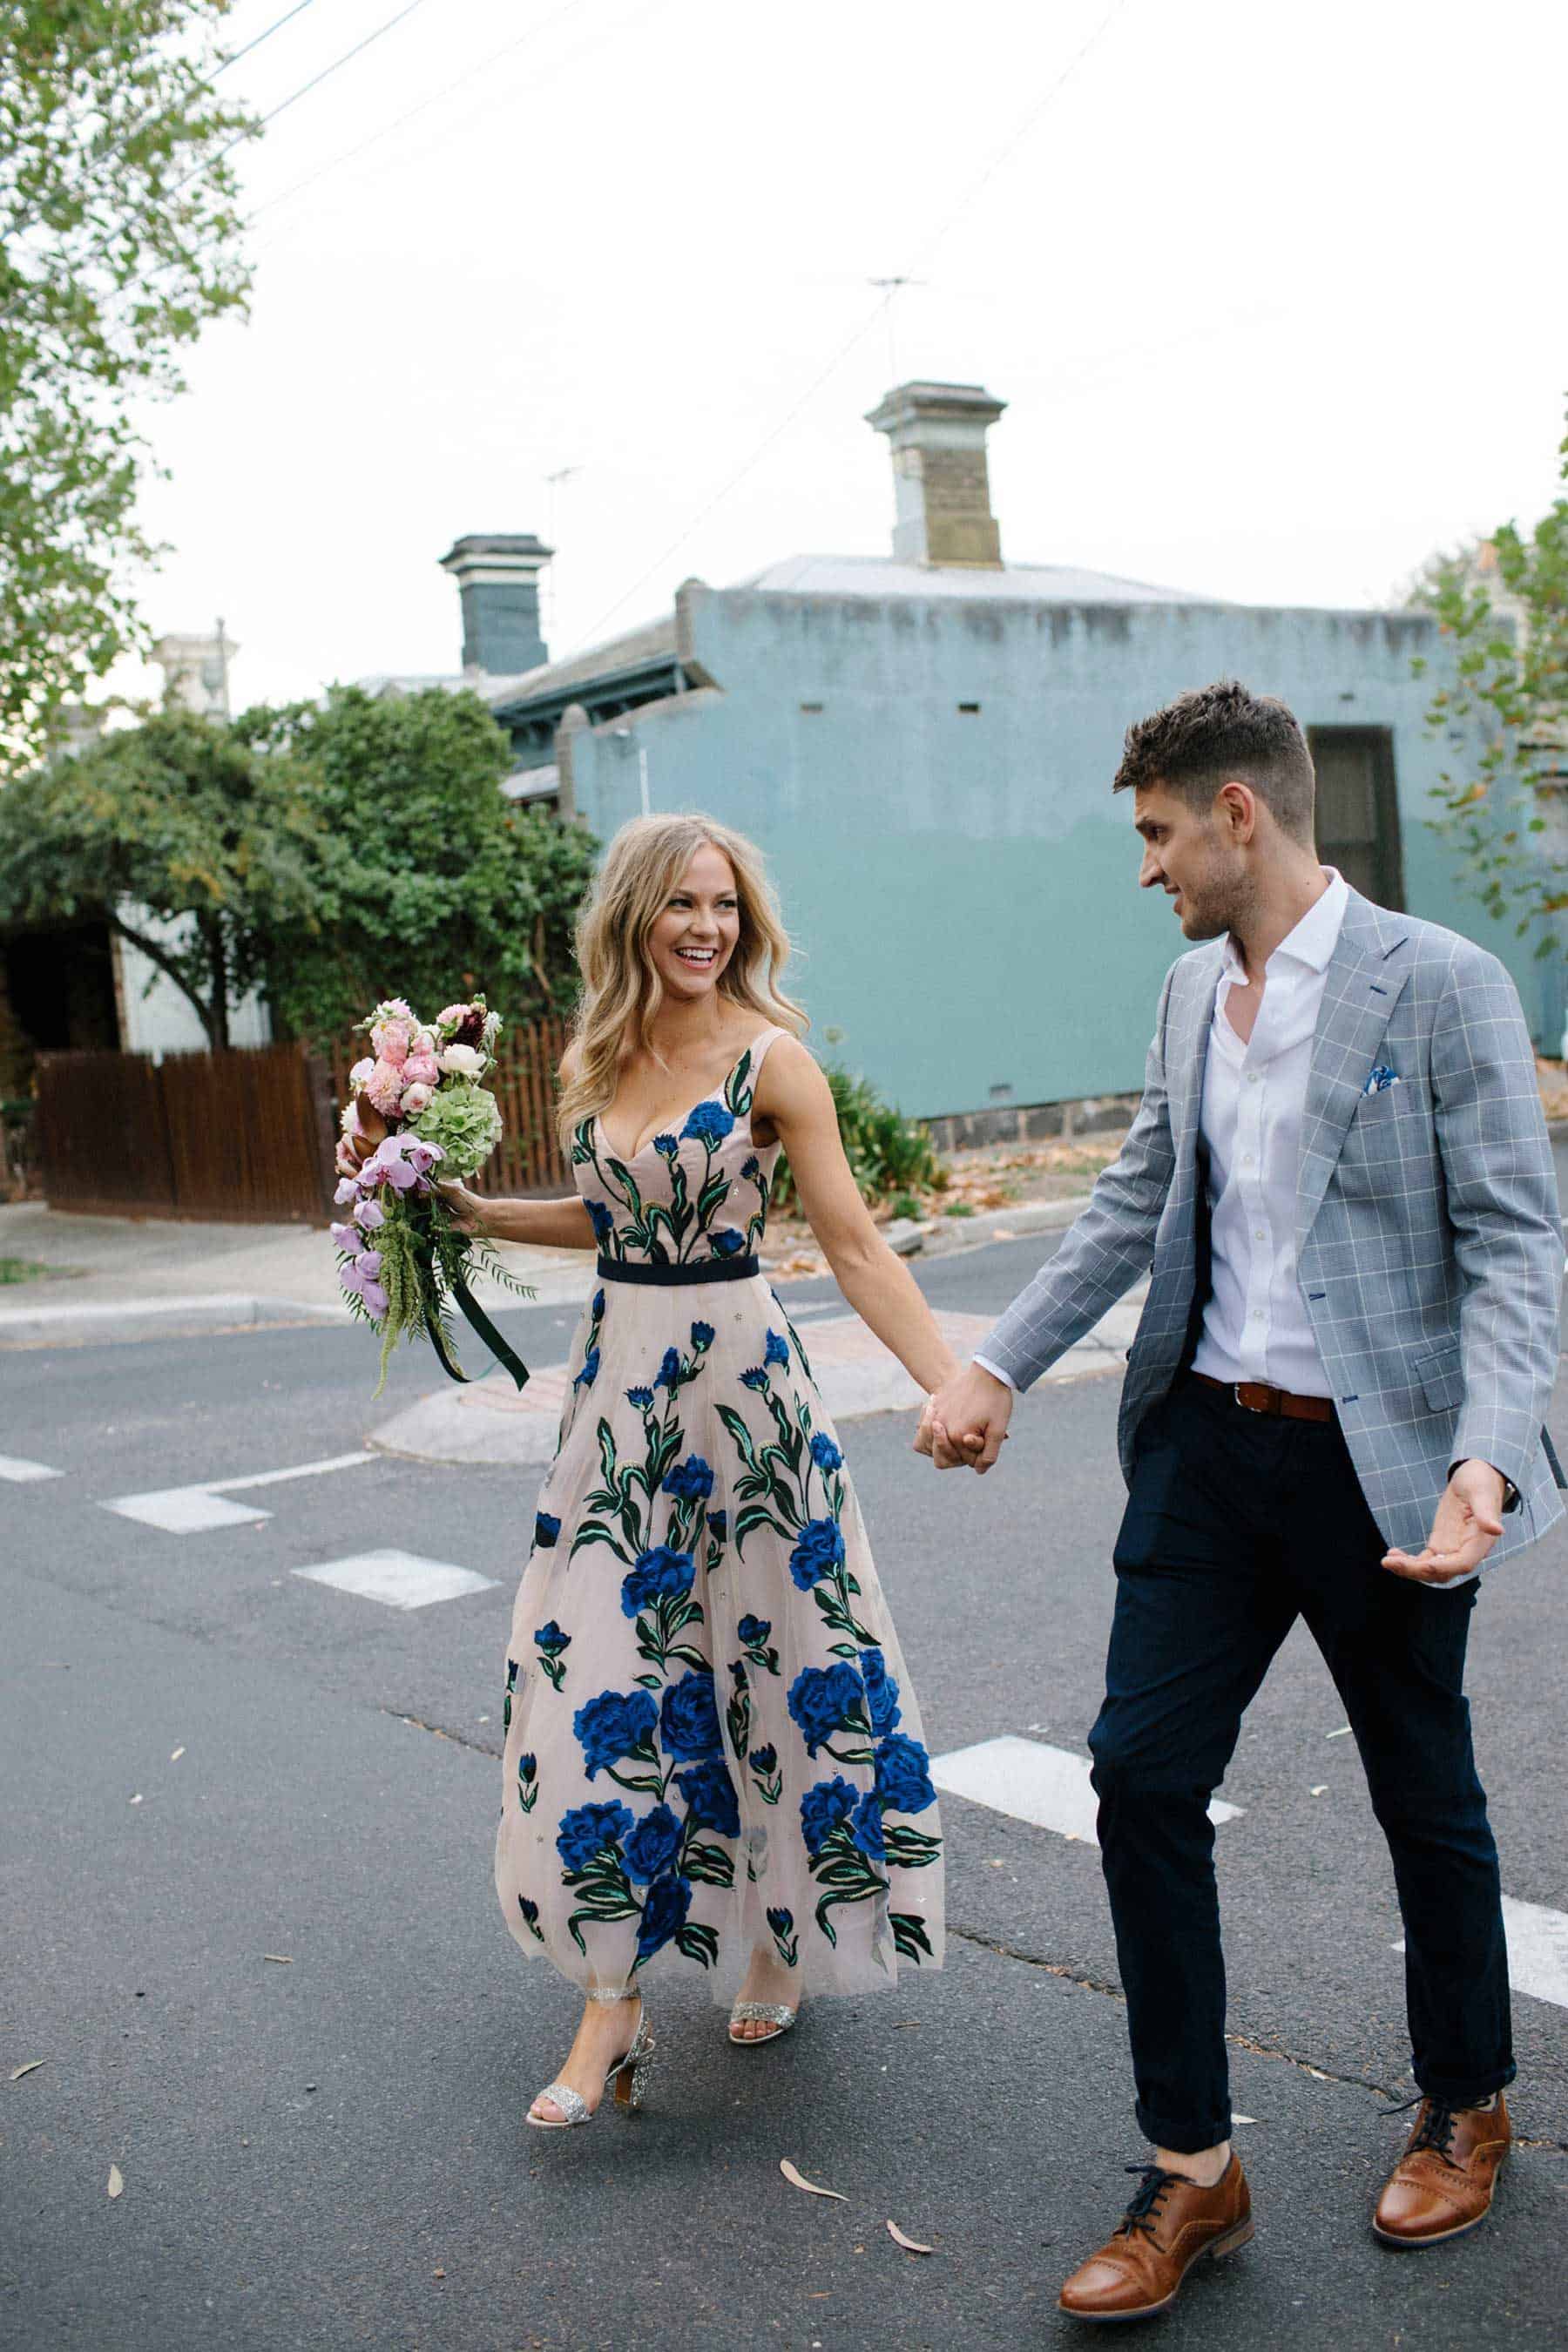 Best wedding dresses of 2019 - blush dress with blue floral applique